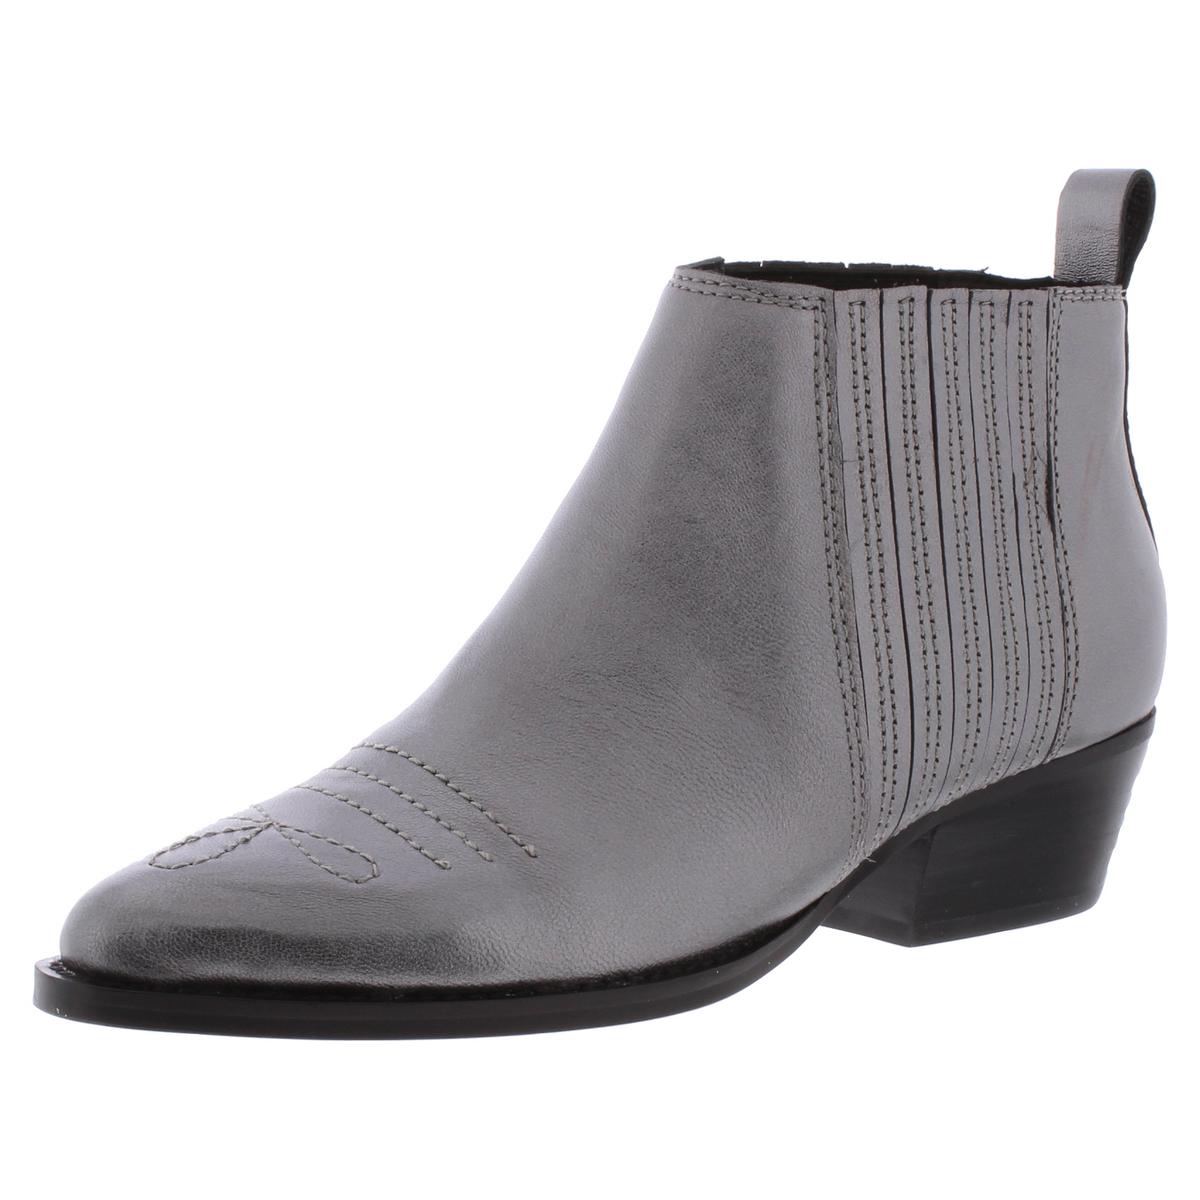 Botkier Womens Texas Gray Leather Booties Shoes 5.5 Medium (B,M) BHFO ...